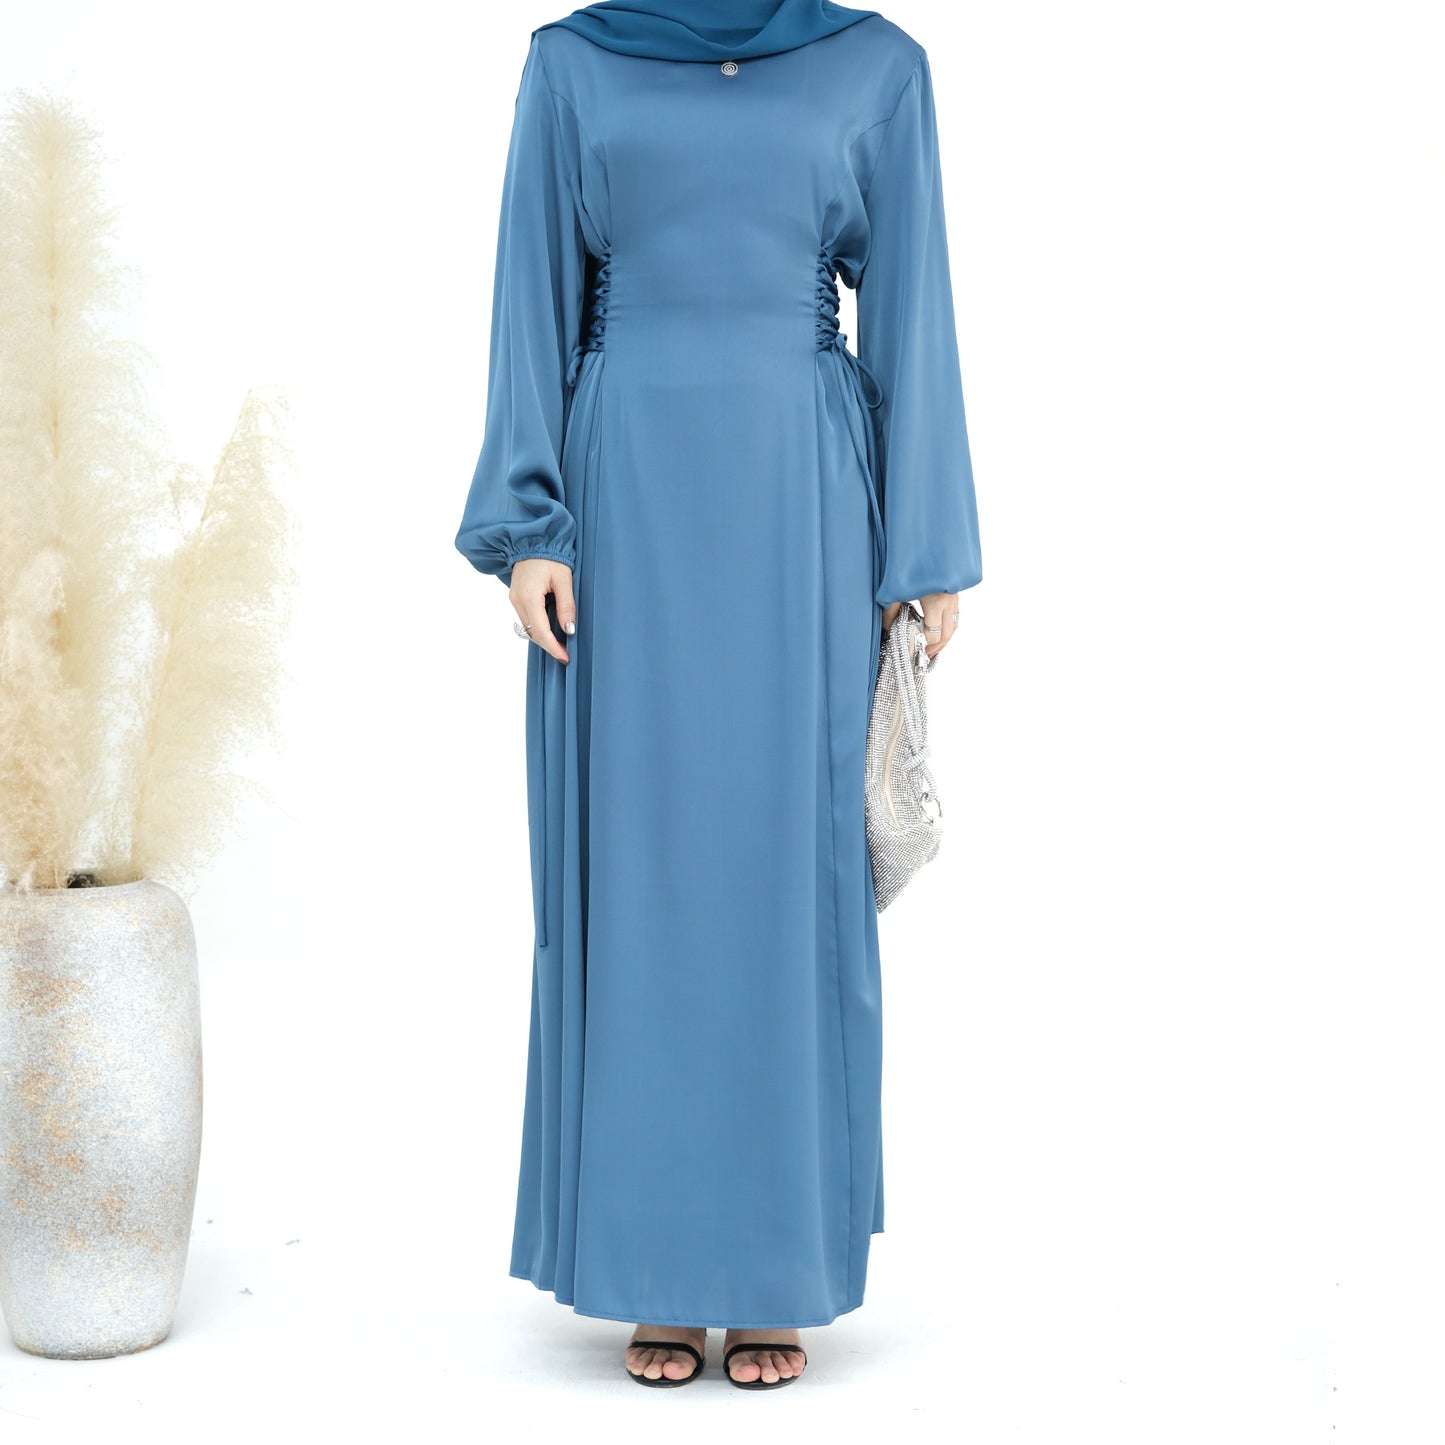 Women's Plain Abaya Dress